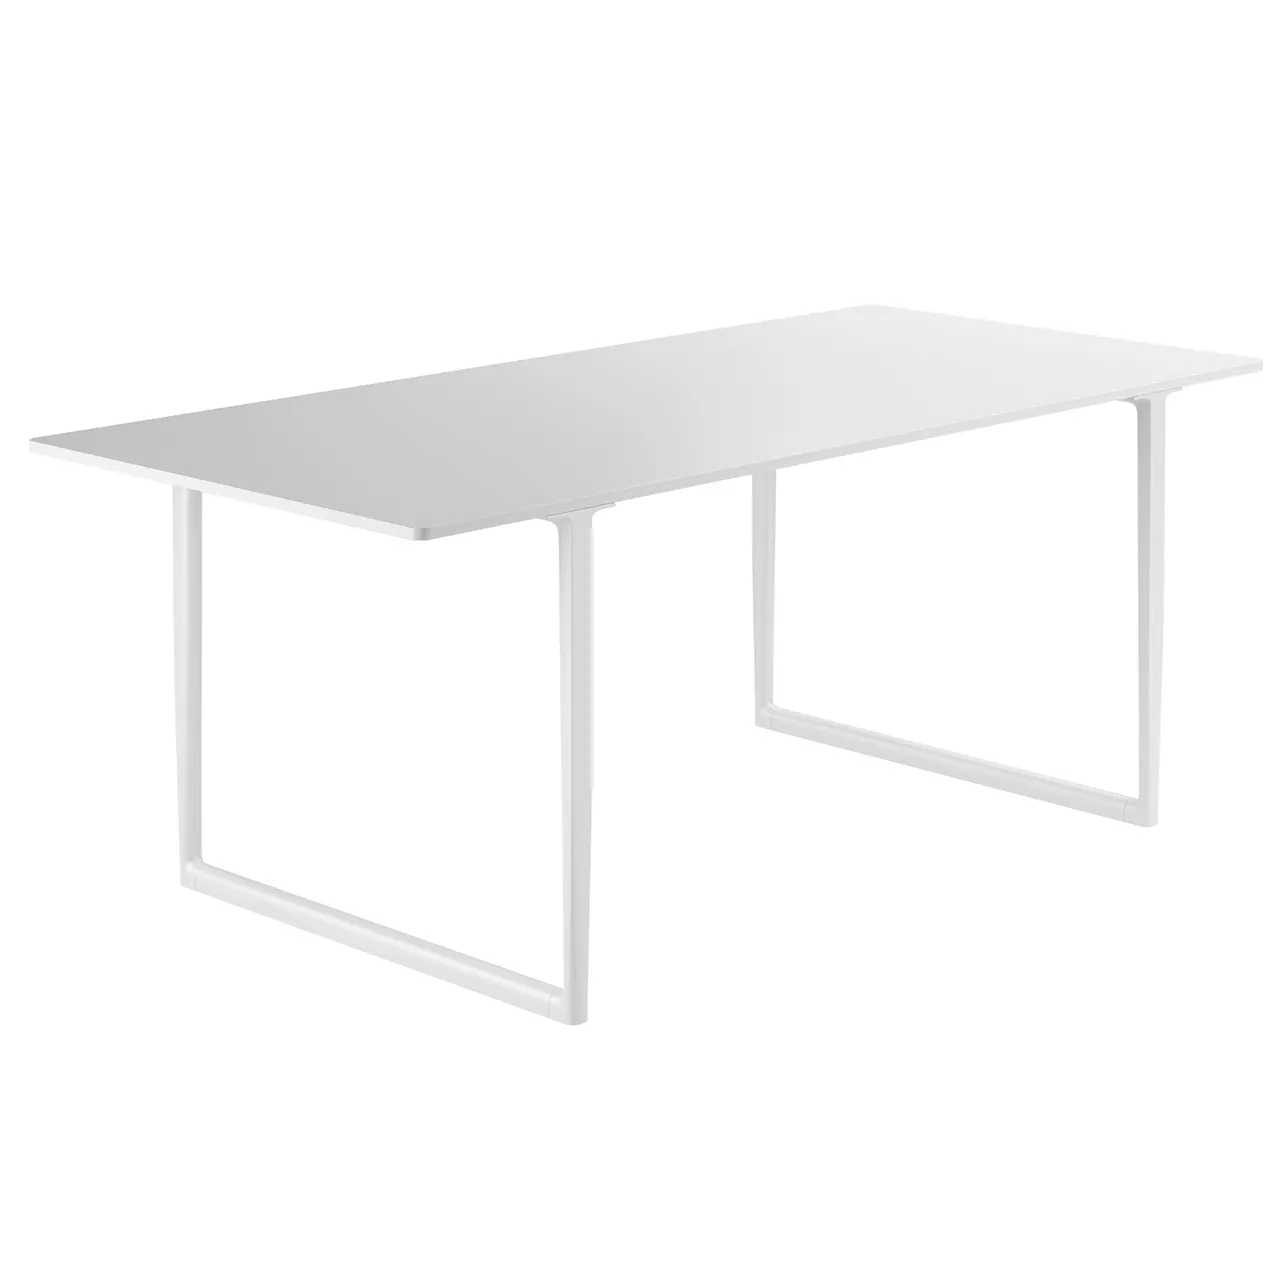 Furniture – toa-toa-rectangular-table-by-pedrali